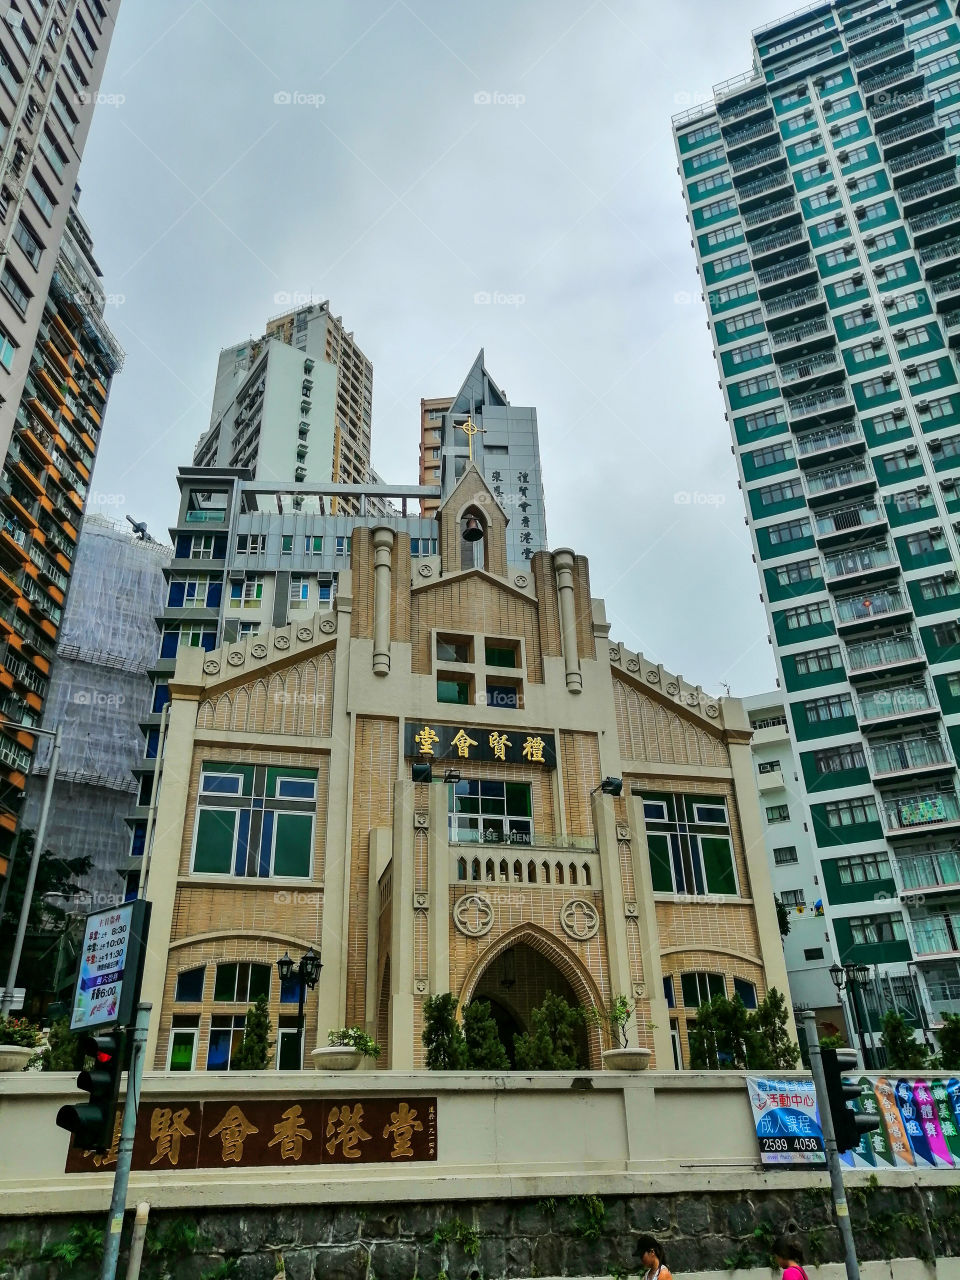 The Chinese Rhenish Church of Hong Kong